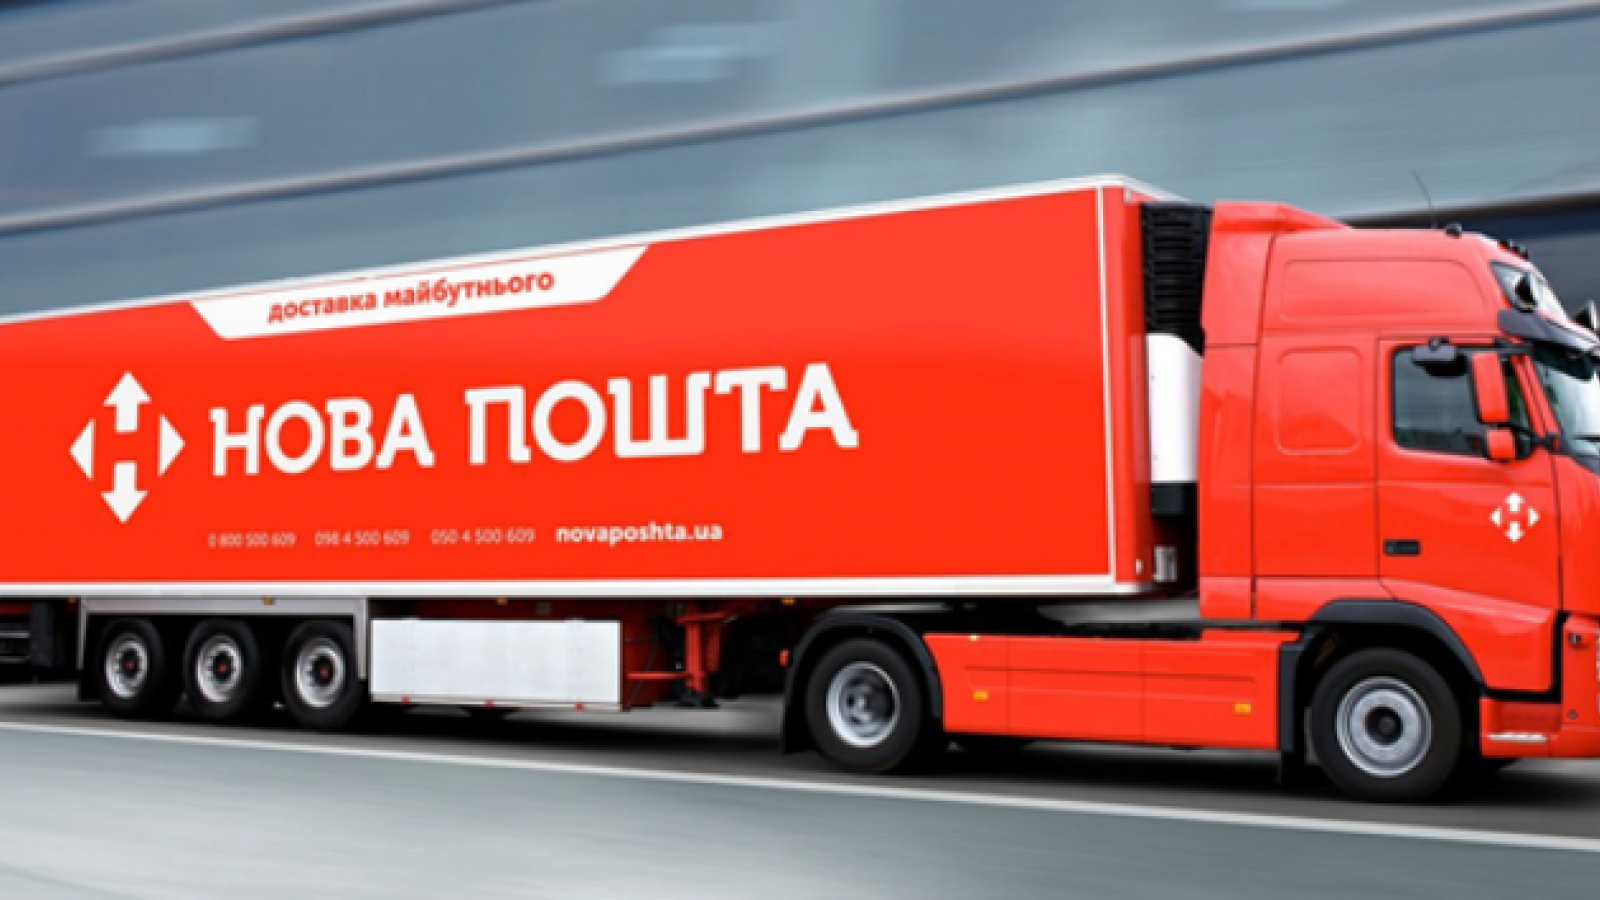 Ukraine’s postal company Nova Poshta to reduce CO2 emissions thanks to modern technologies